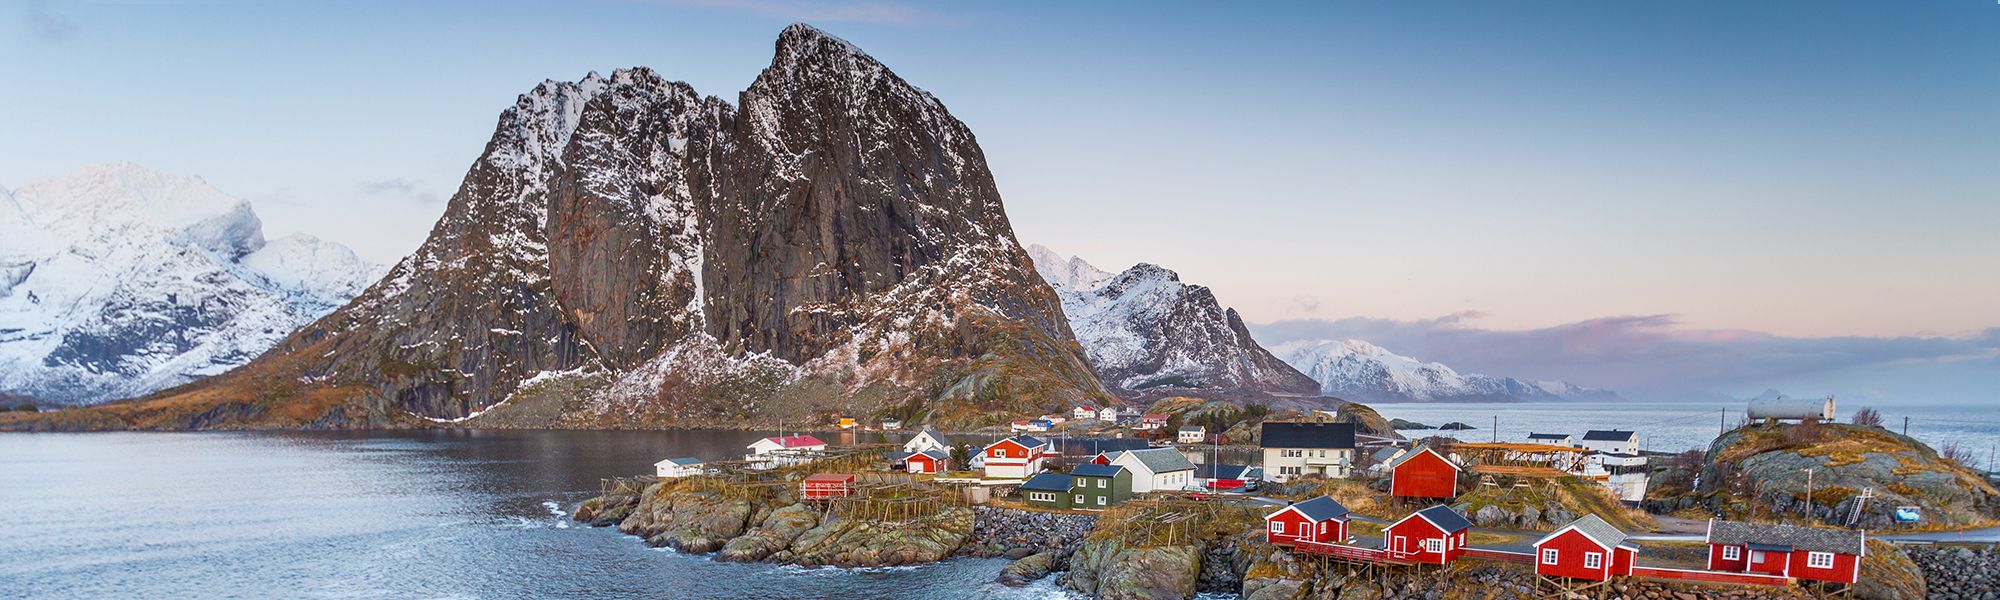 Voyage Norvège © Alex Cornu - Visit Norway